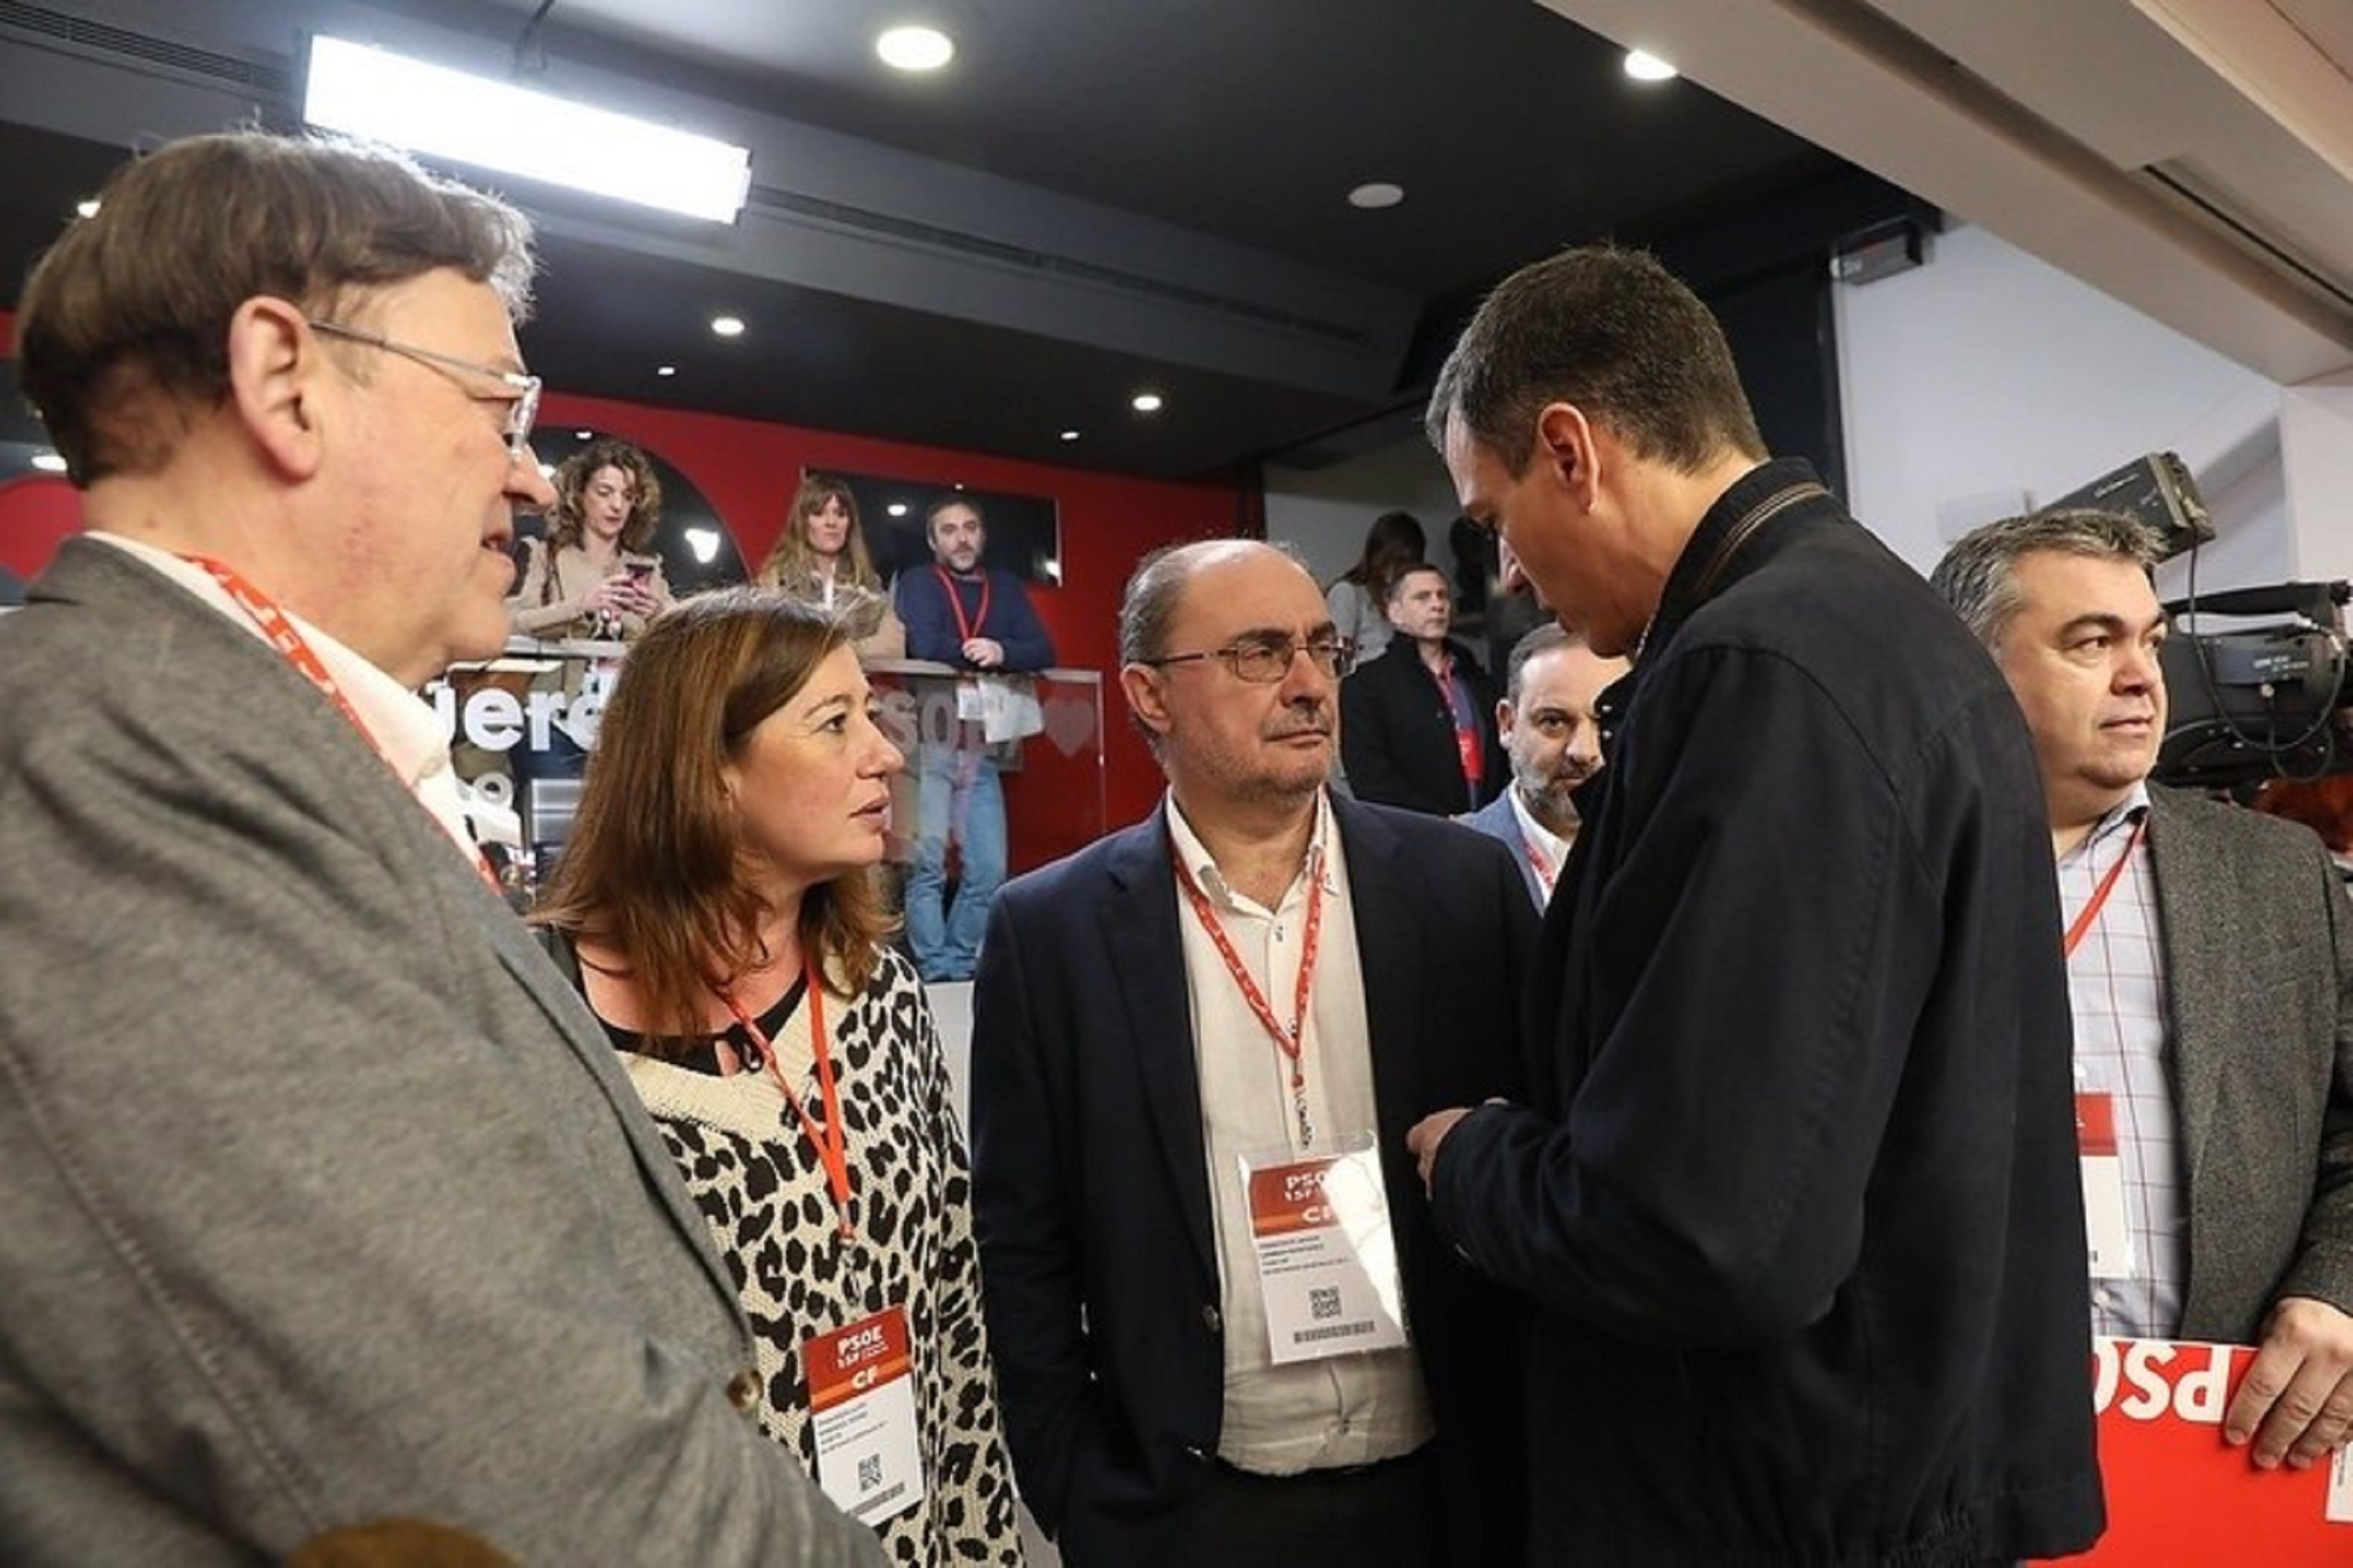 PSOE regional leaders distrust dialogue with Catalonia: "Do not reward the disloyal"